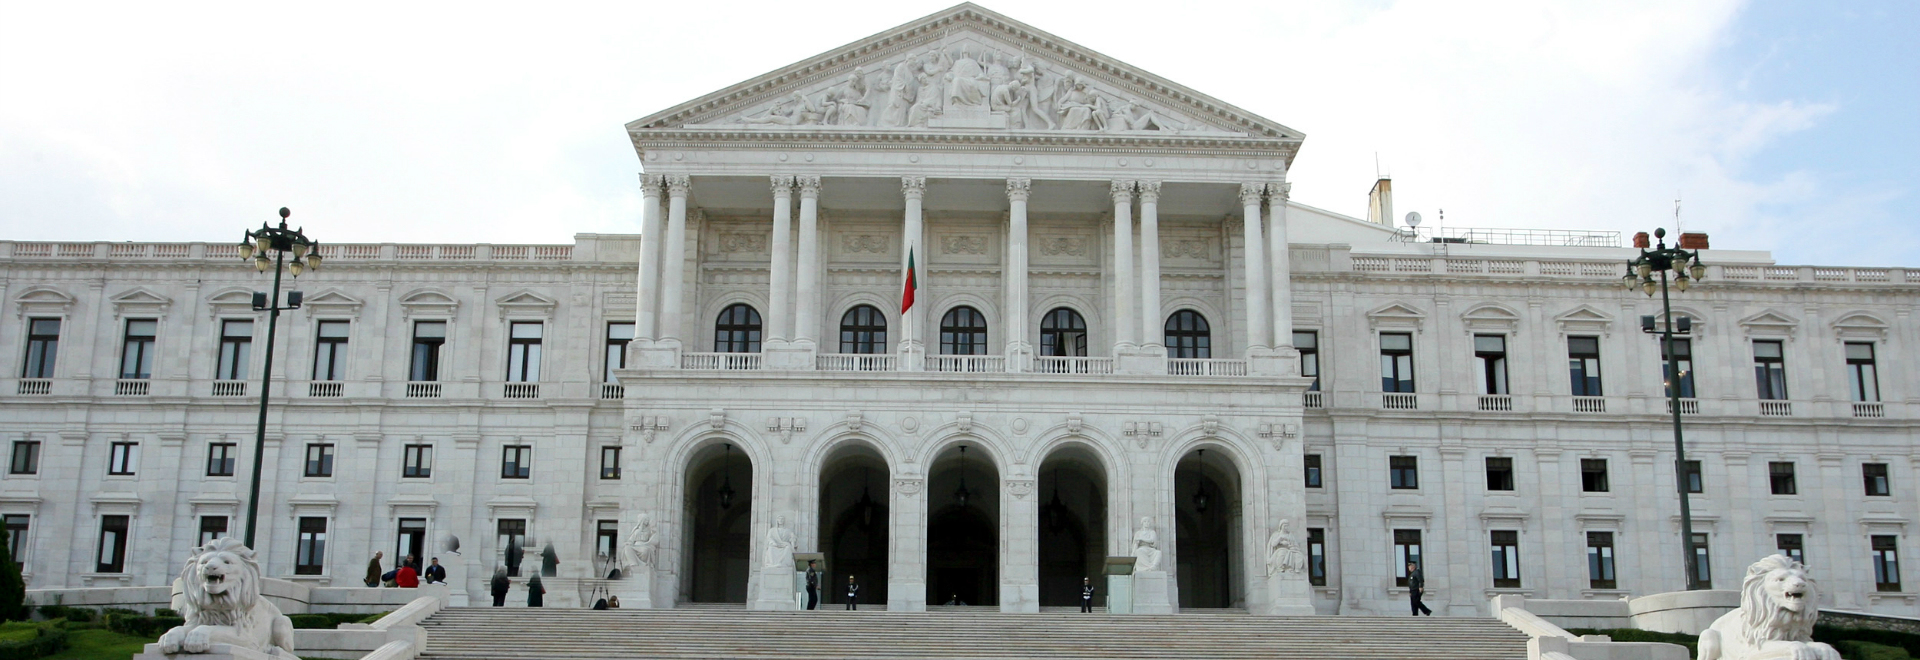 Palais sao bento lisbonne Portugal